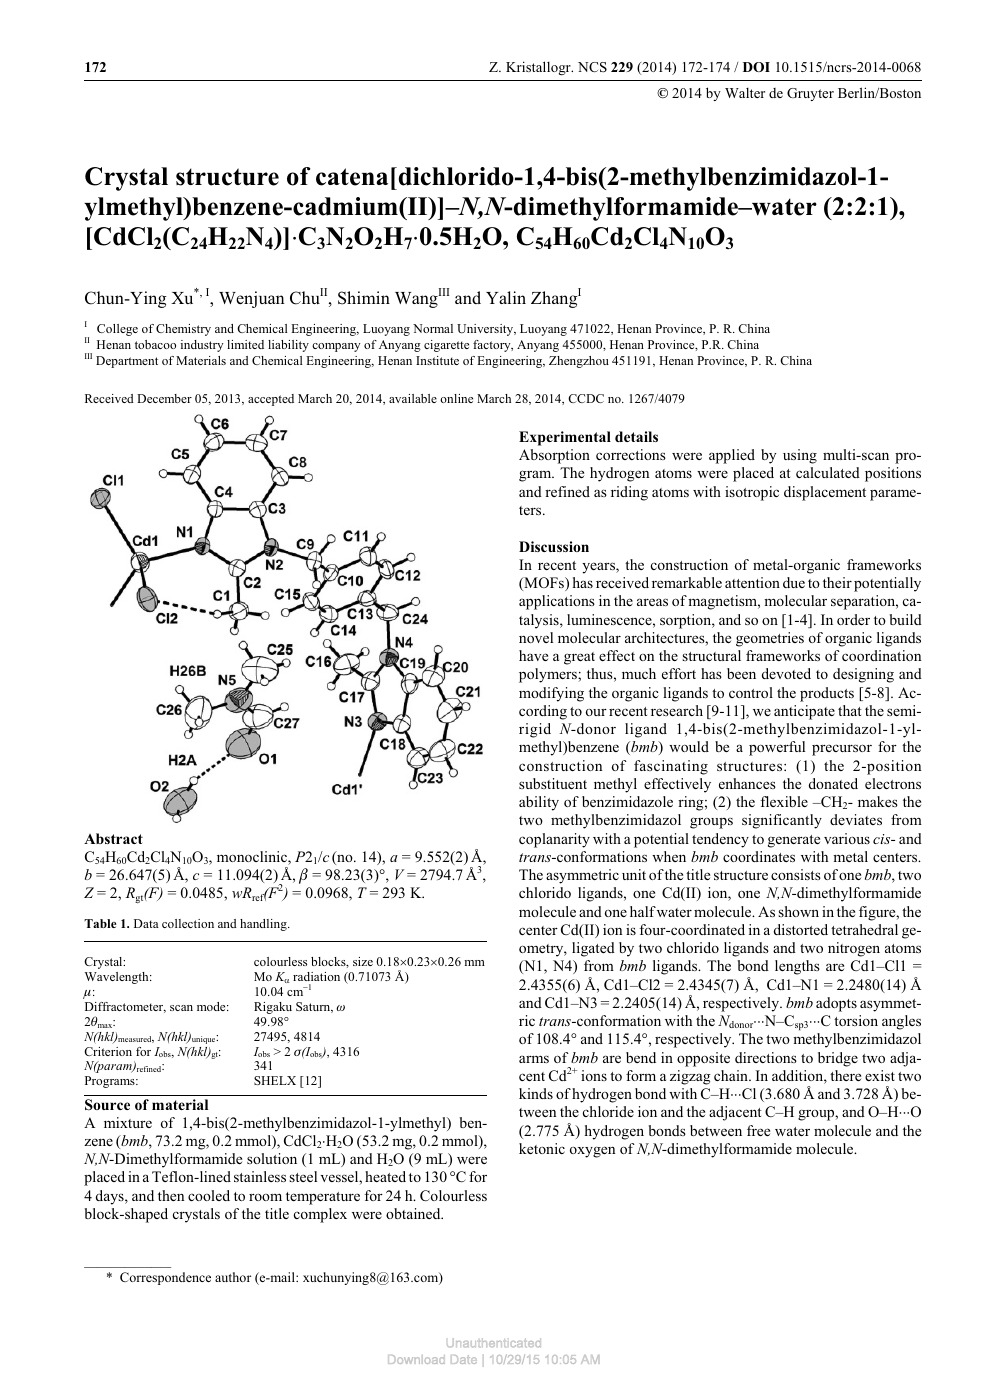 Crystal Structure Of Catena Dichlorido 1 4 Bis 2 Methylbenzimidazol 1 Ylmethyl Benzene Cadmium Ii N N Dimethylformamide Water 2 2 1 Cdcl2 C24h22n4 C3n2o2h7 0 5h2o C54h60cd2cl4n10o3 Topic Of Research Paper In Materials Engineering Download